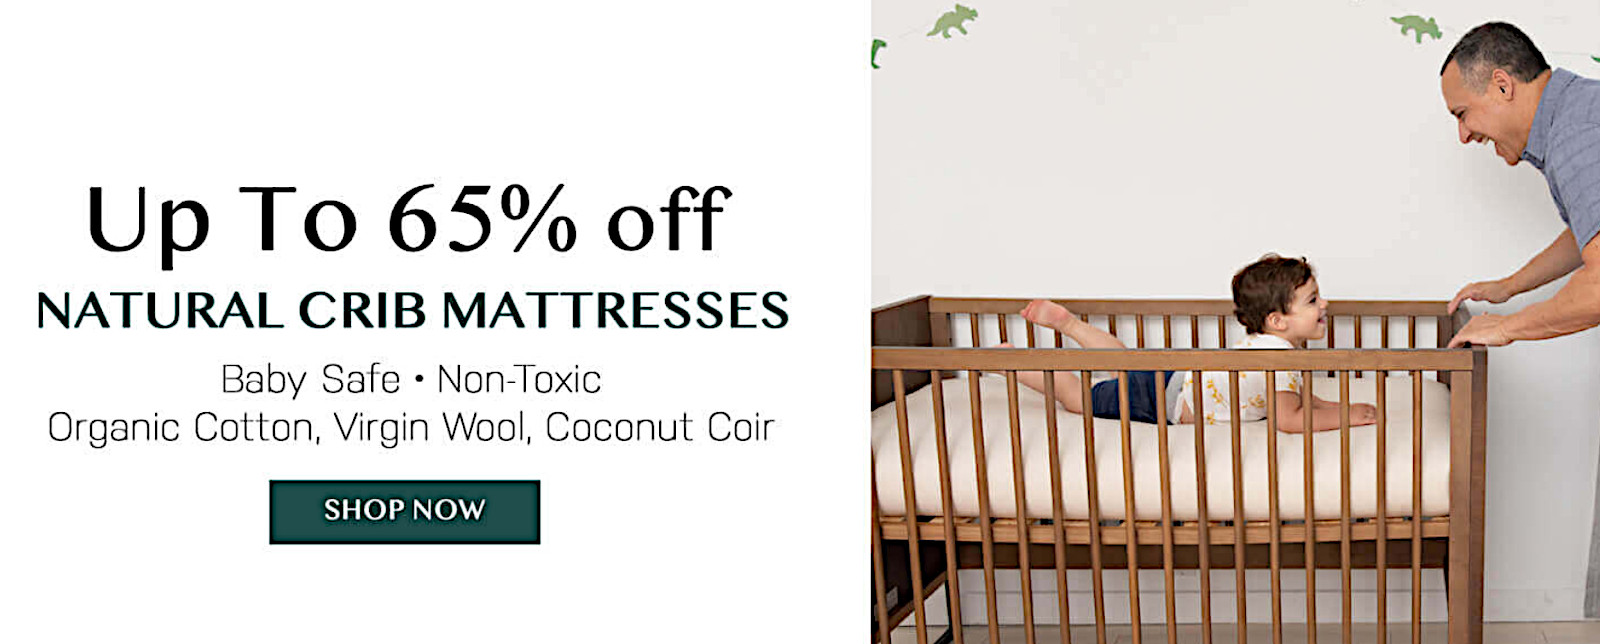 natural crib mattresses cheap price